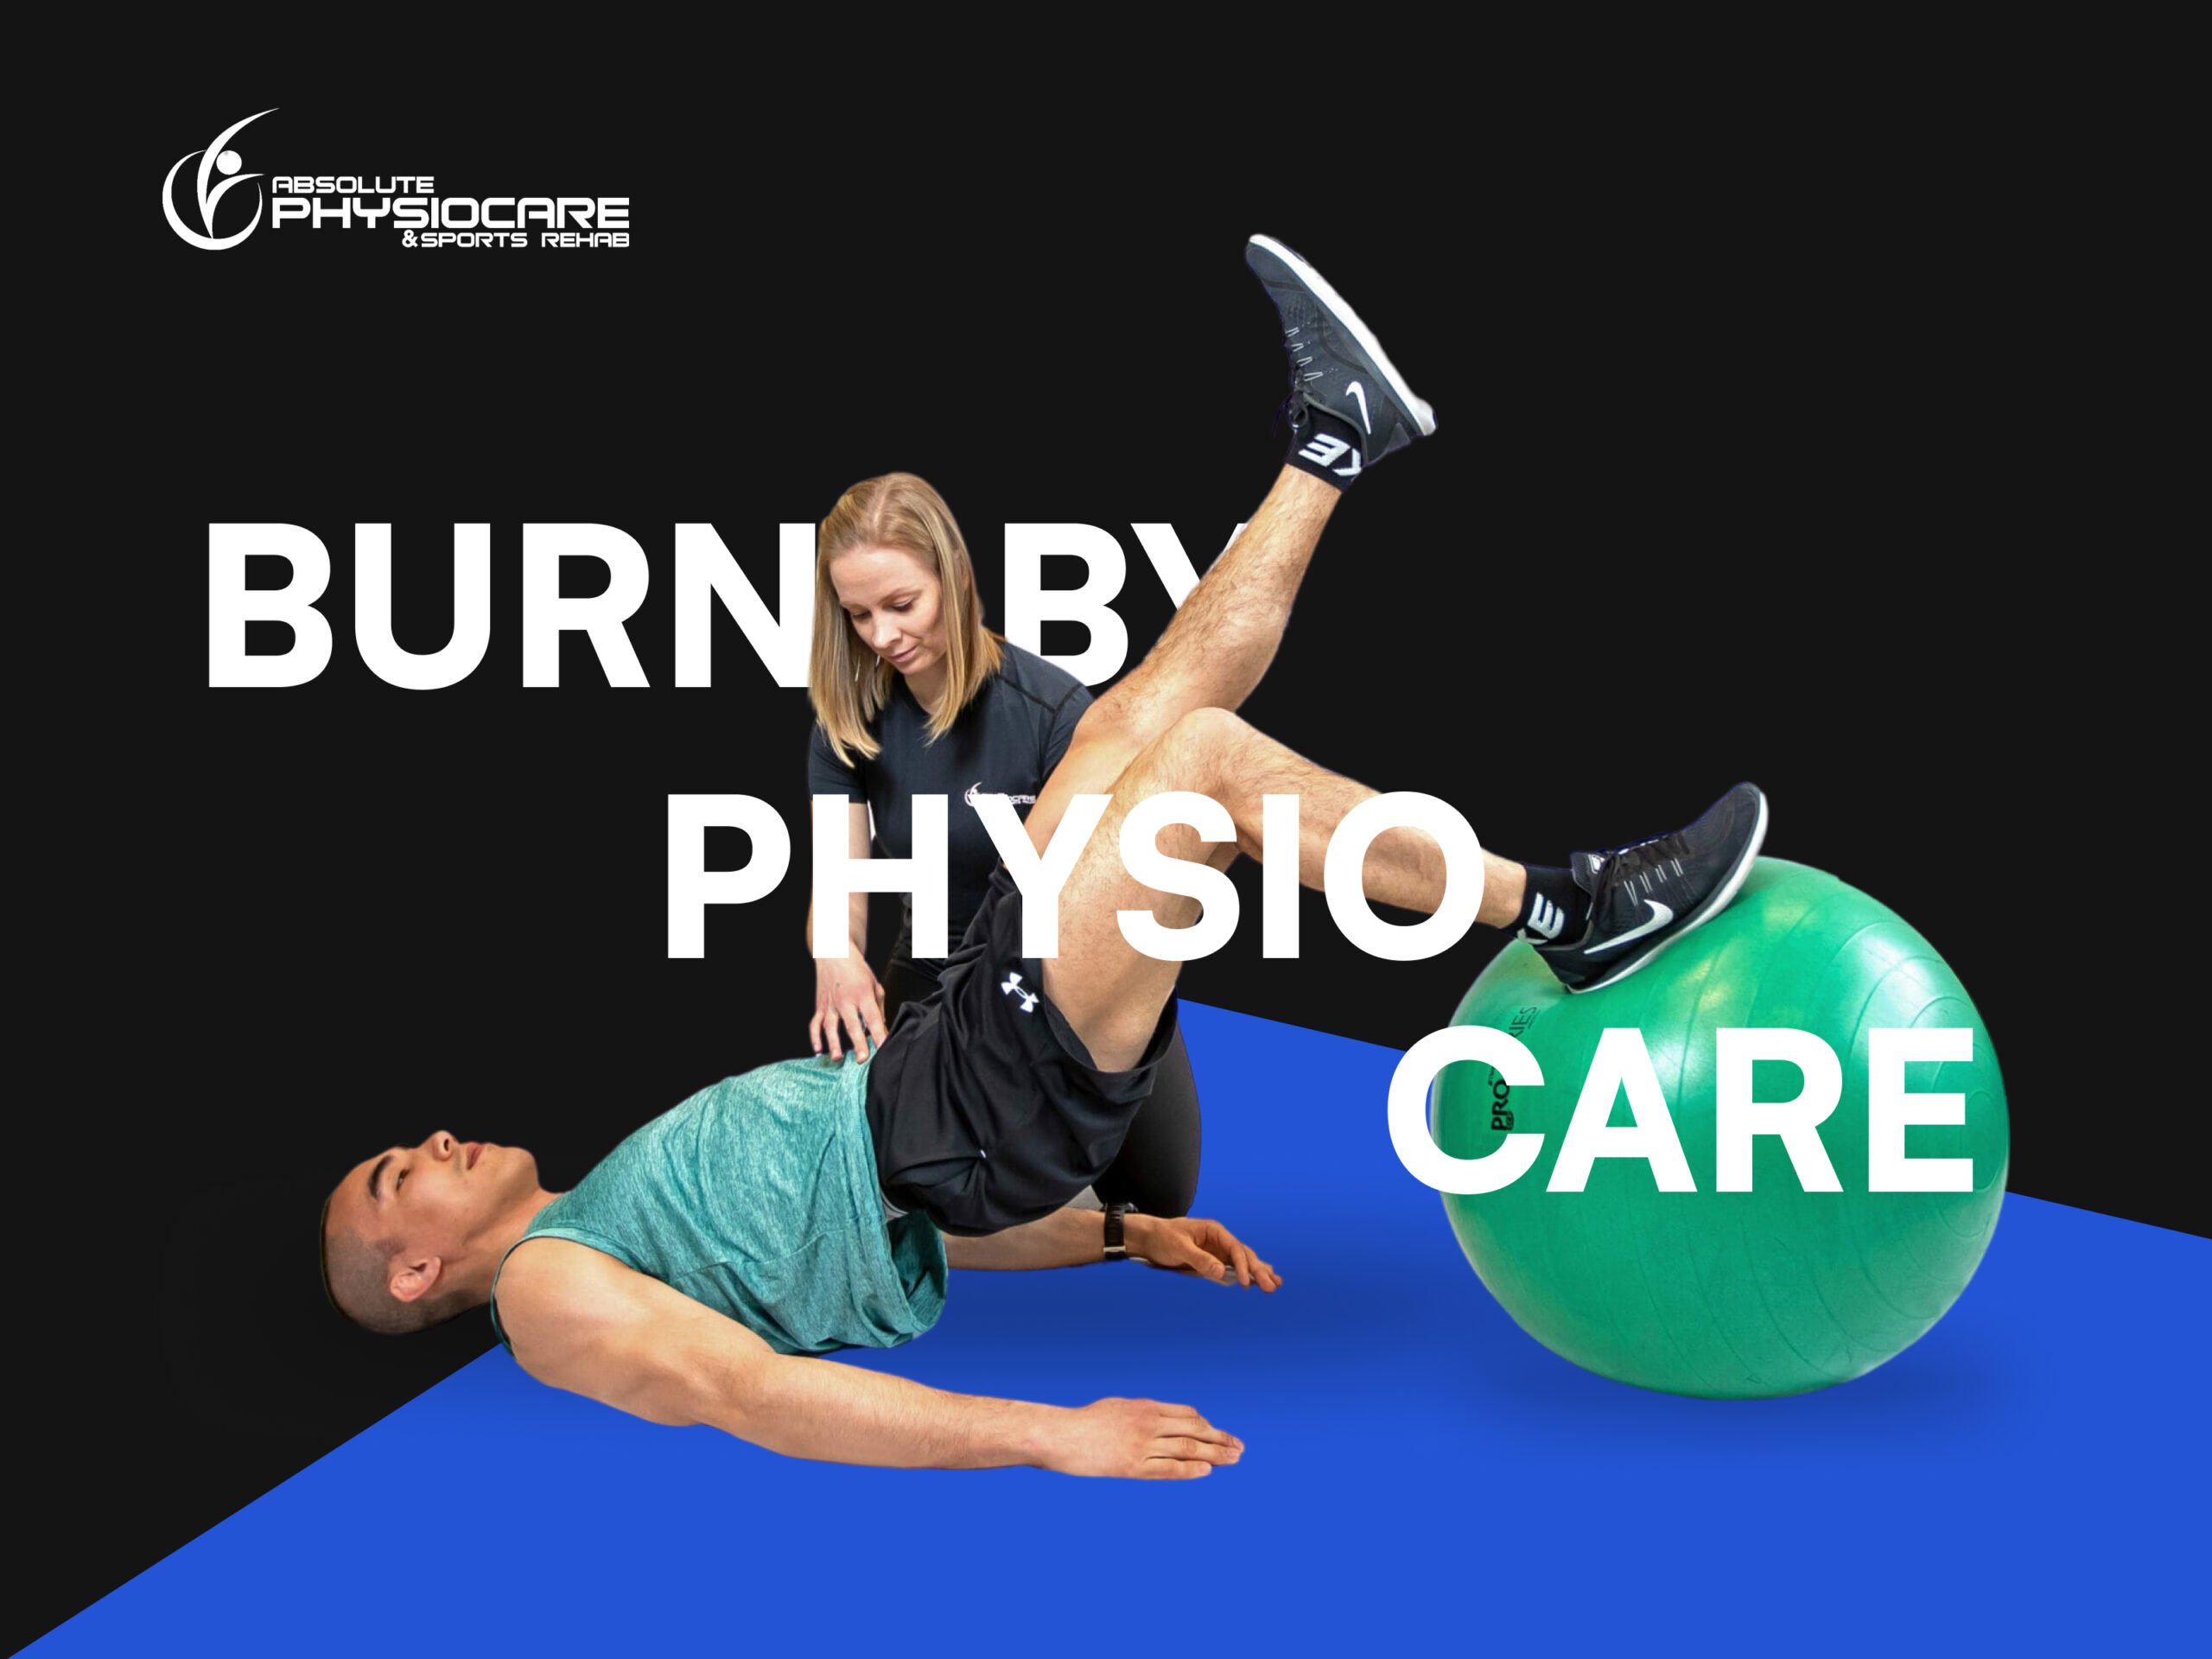 Burnaby physio care